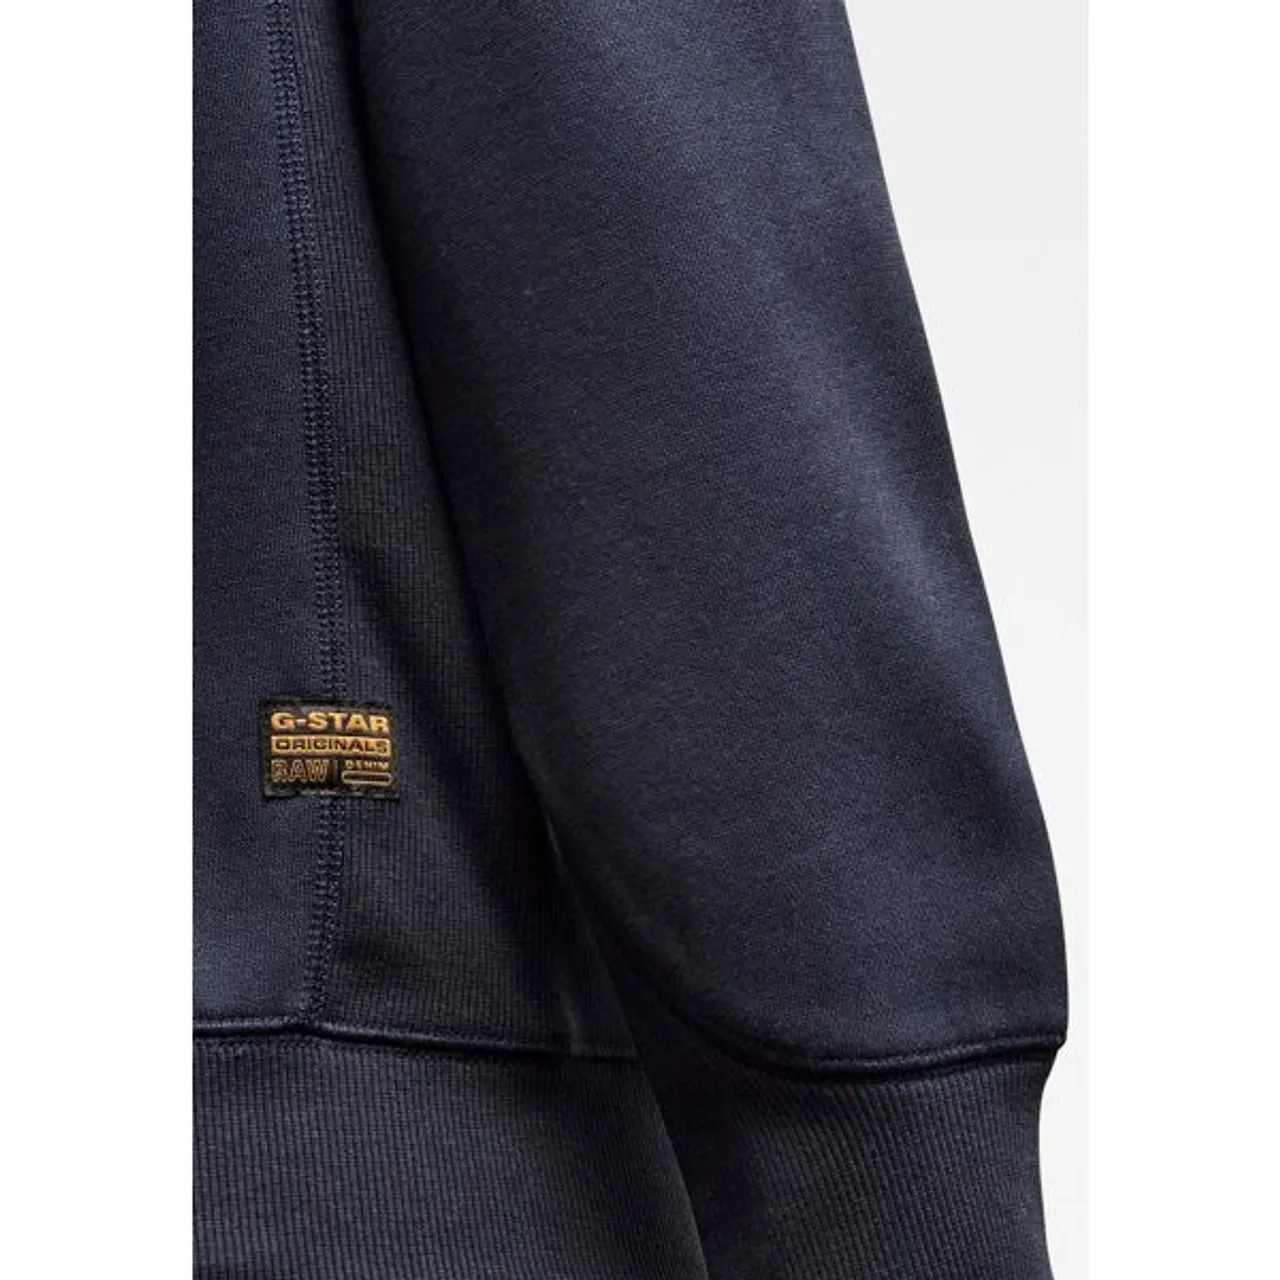 Kapuzensweatjacke G-STAR RAW "Premium Basic Hooded Zip Sweater" Gr. XL (56/58), blau (sartho blue) Herren Sweatjacken